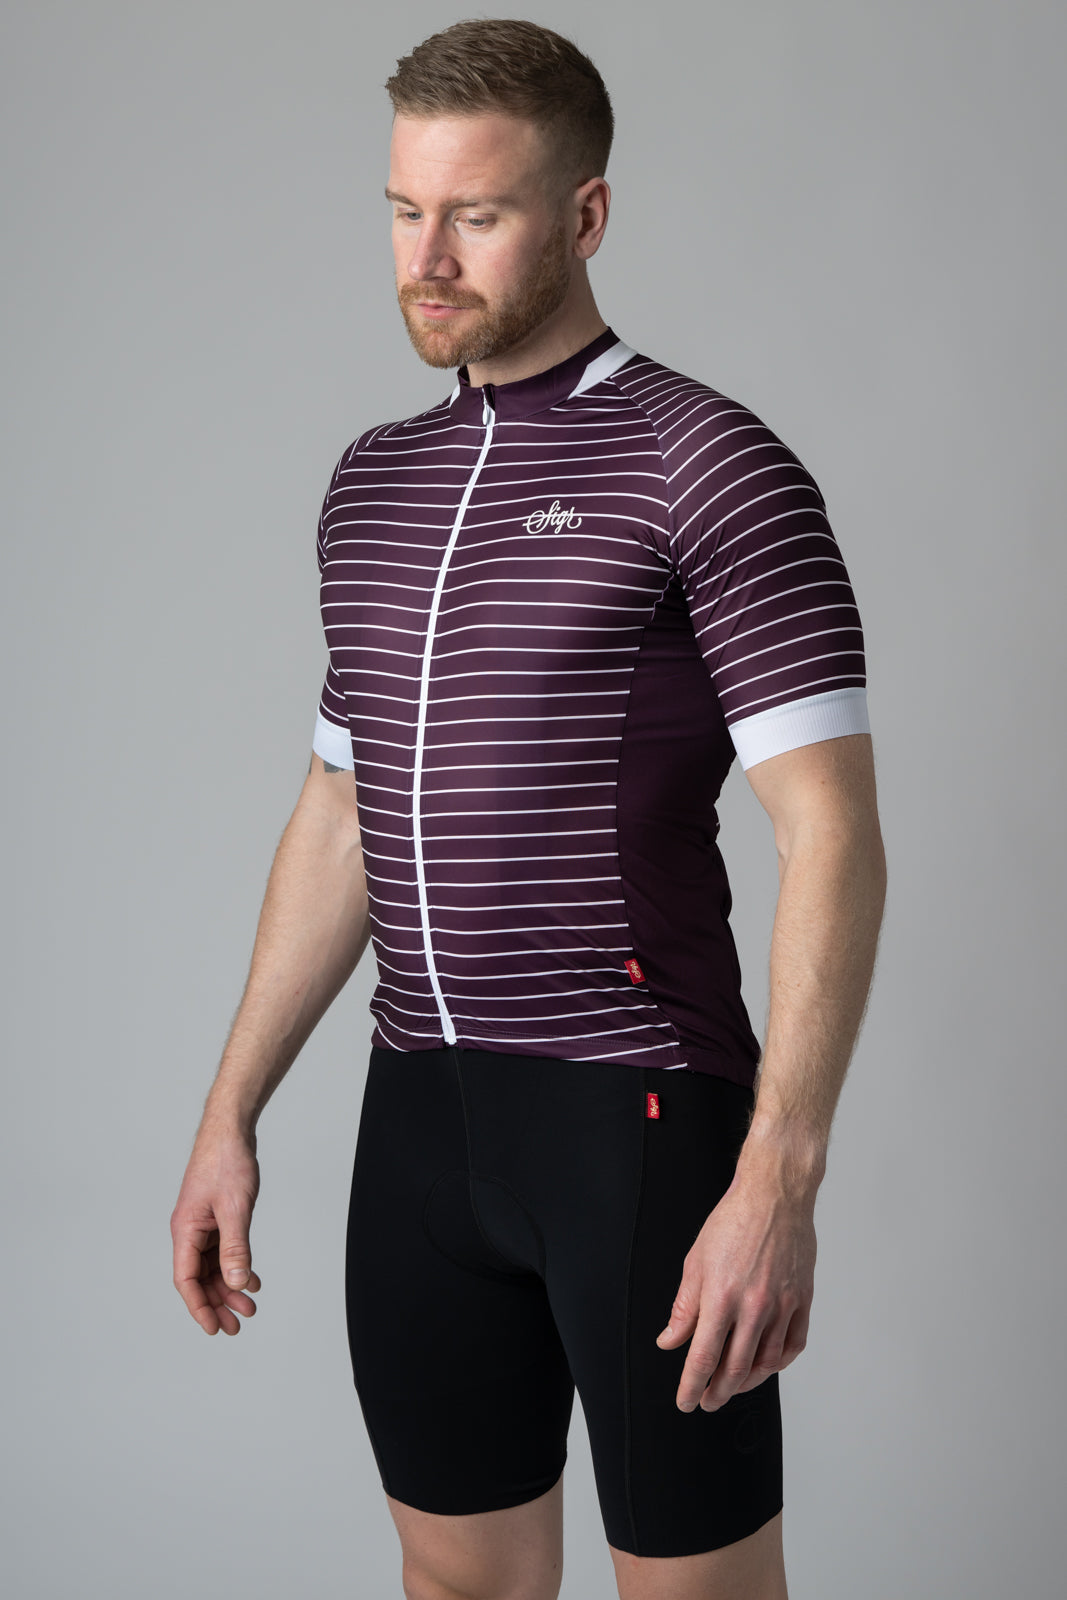 Purple Horizon - Road Cycling Jersey for Men